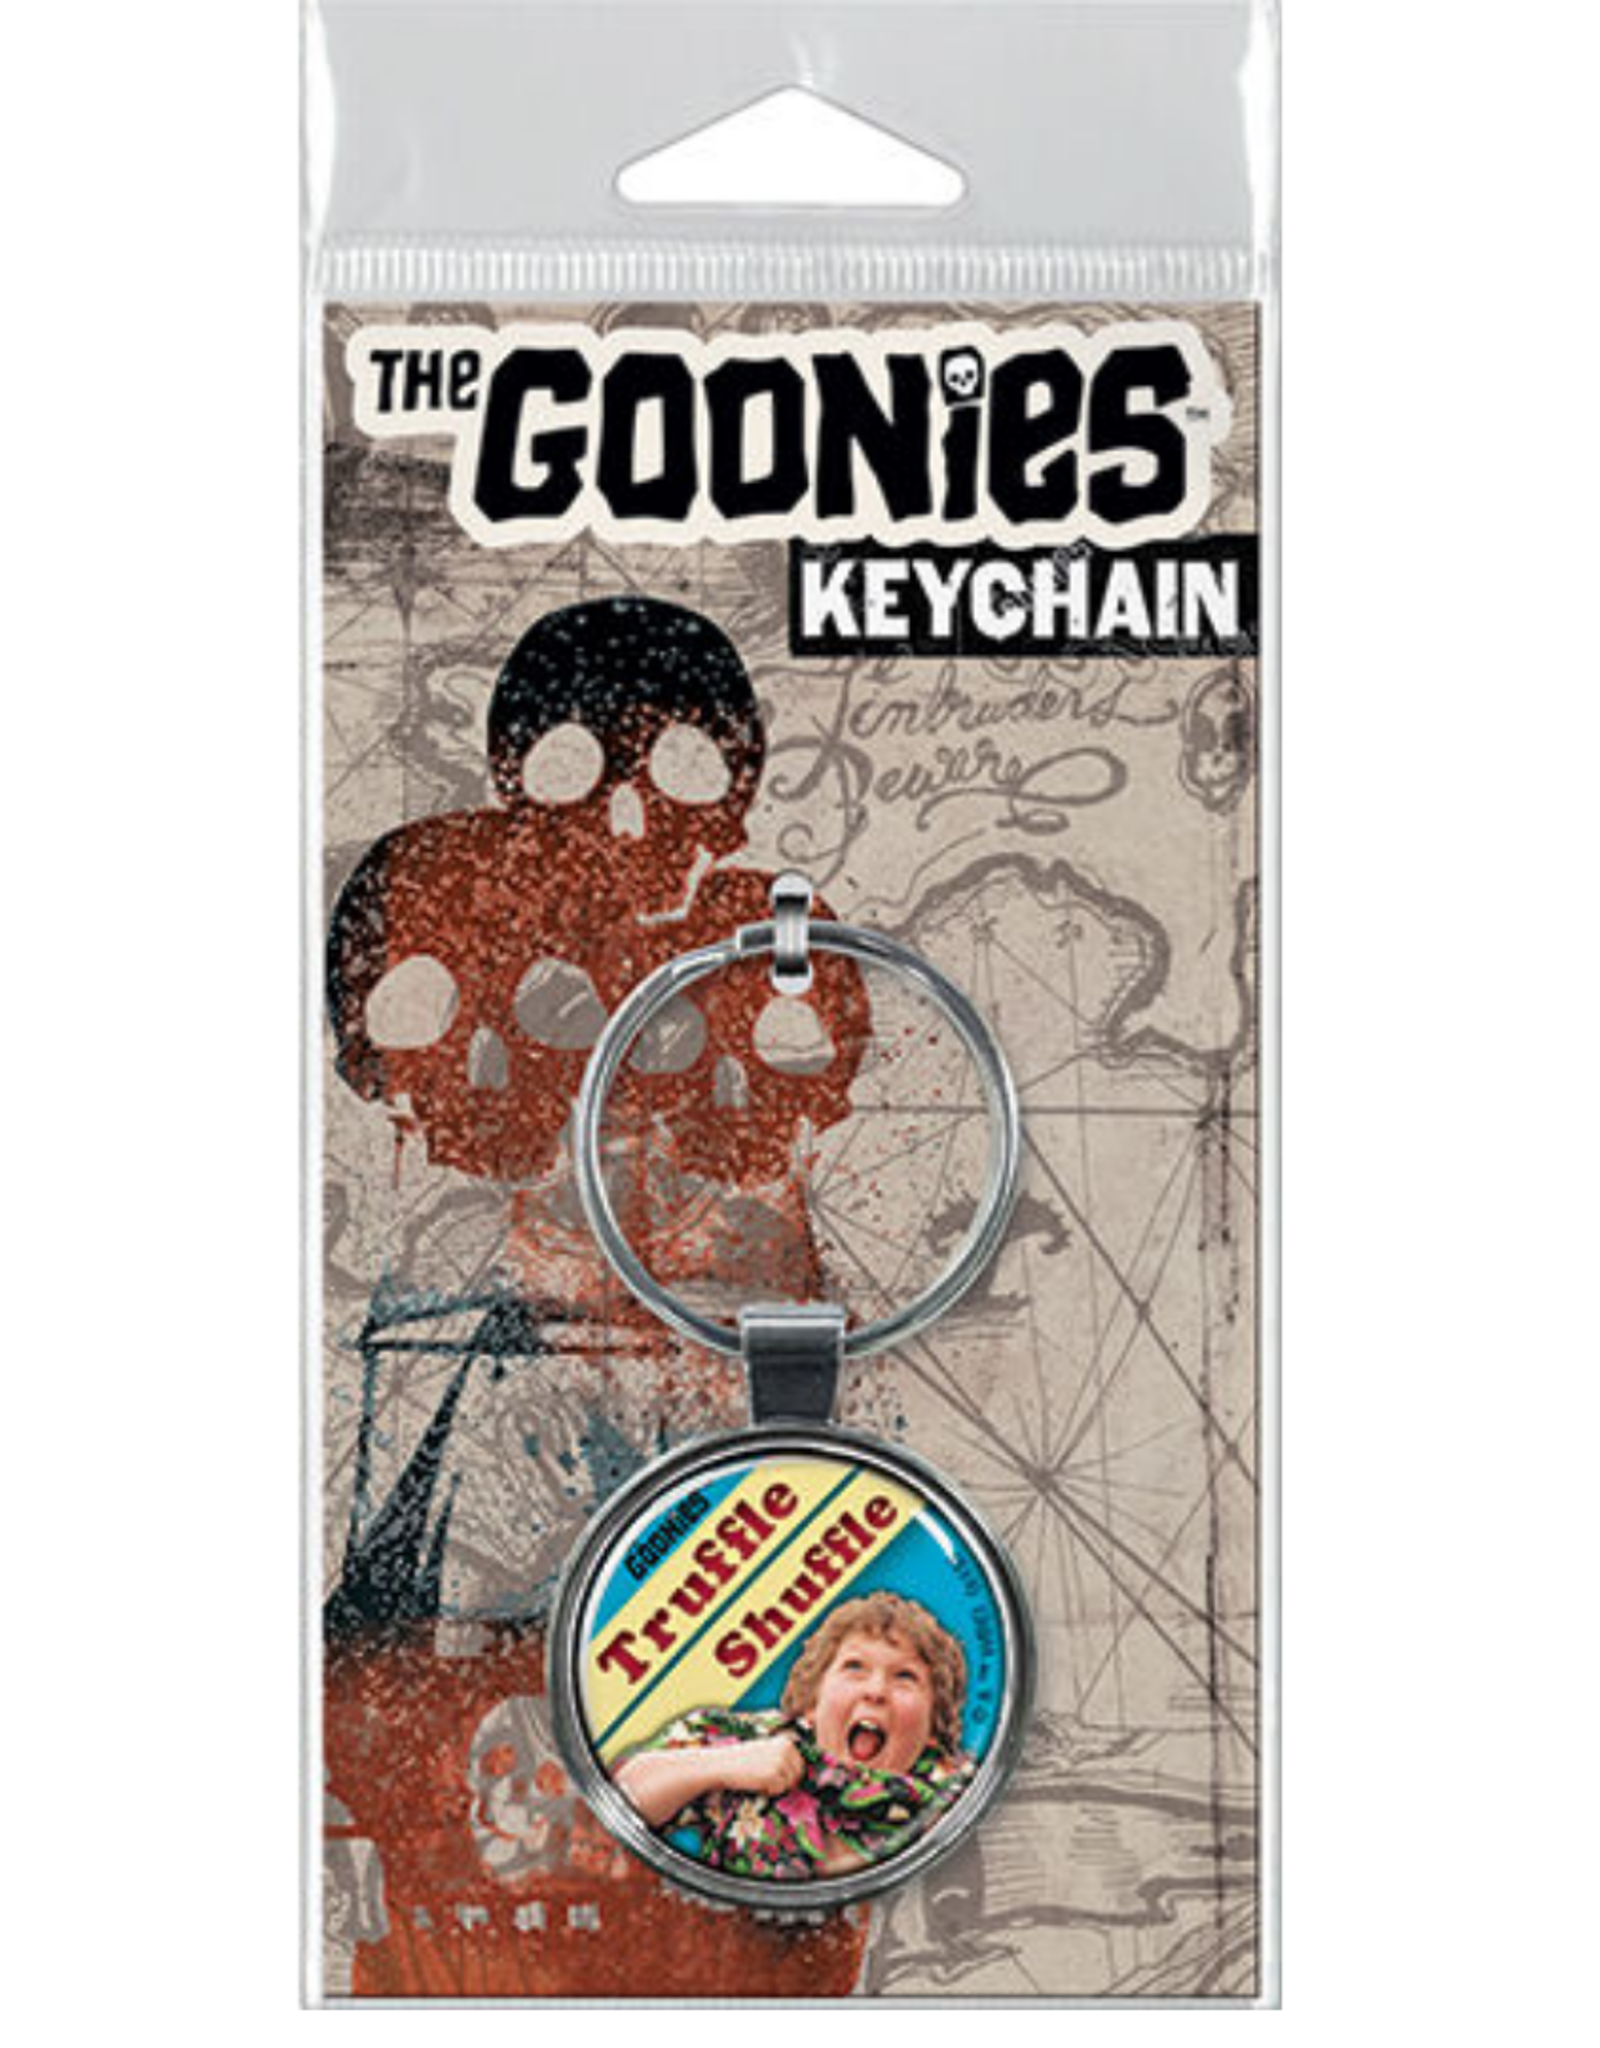 Ata-Boy The Goonies: Truffle Shuffle Keychain